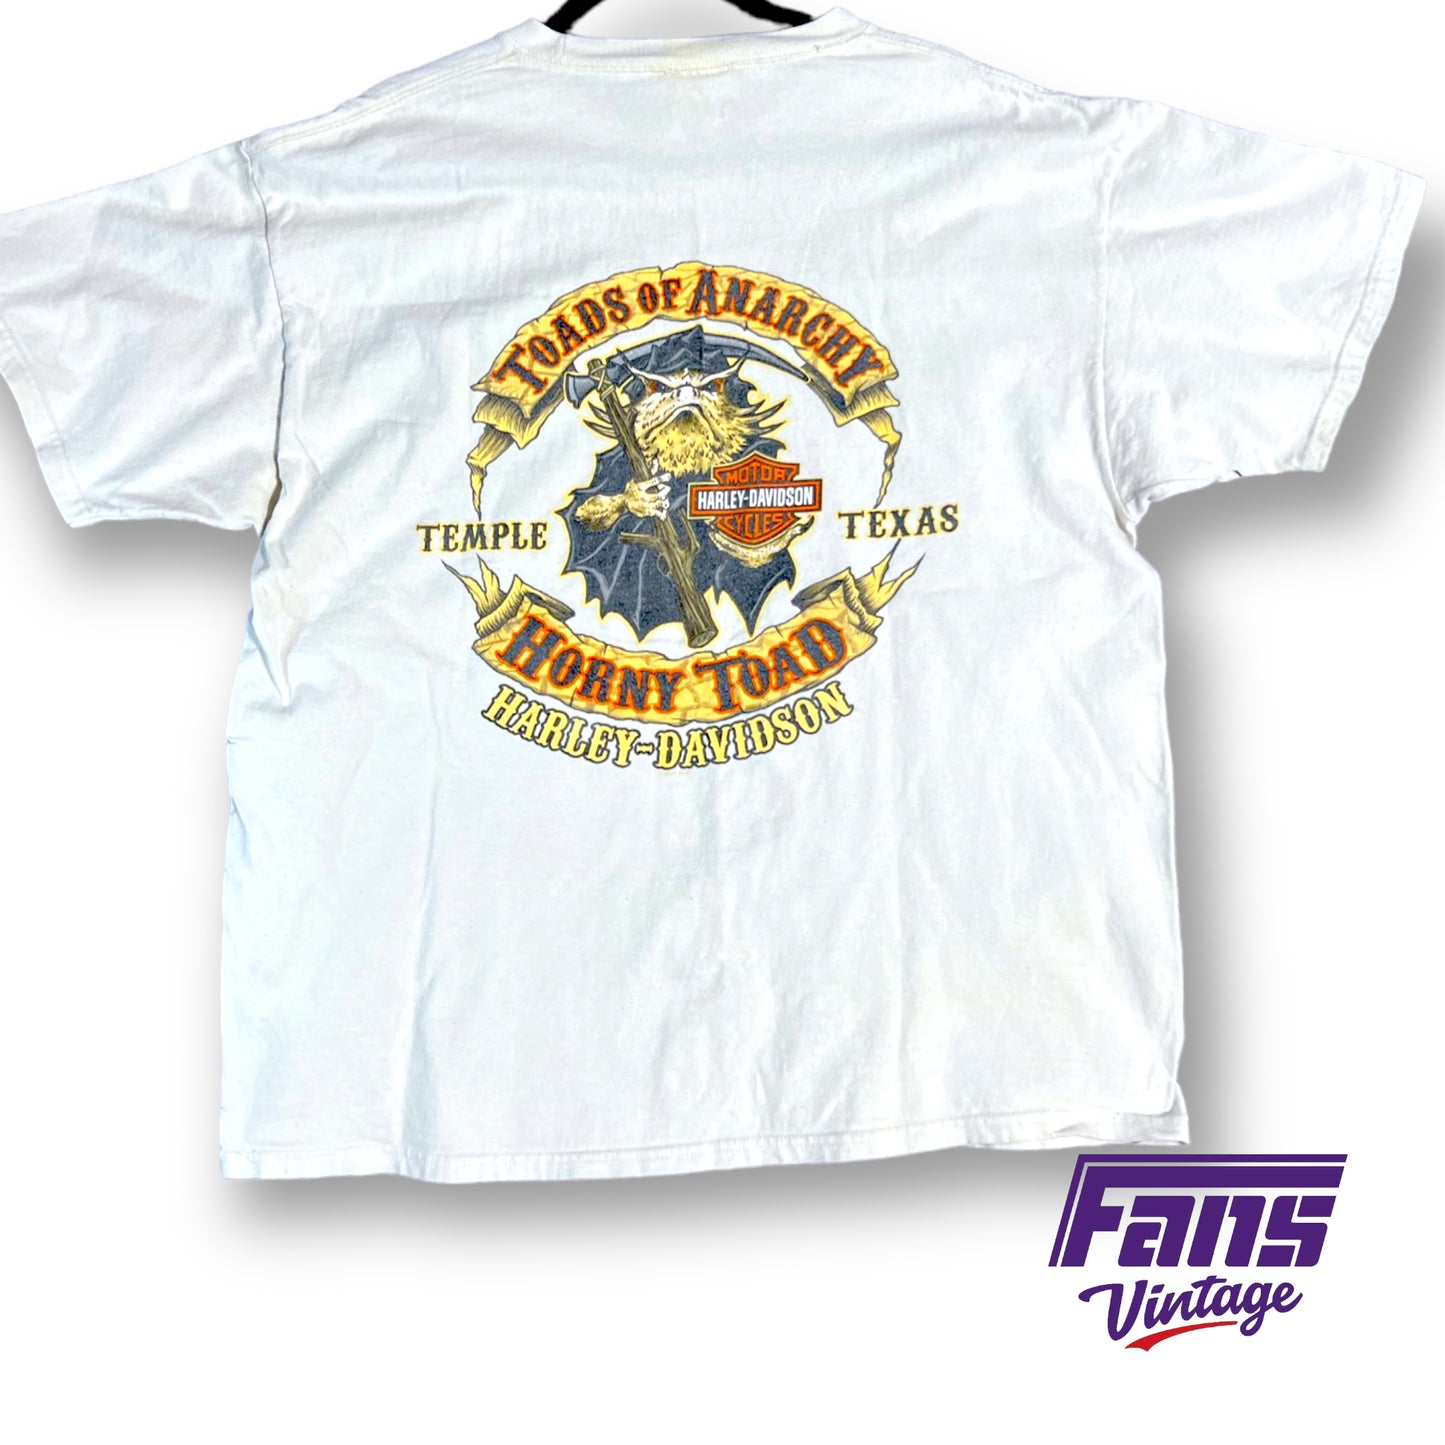 Vintage Horny Toad Harley Davidson TCU 'Toads of Anarchy' tee